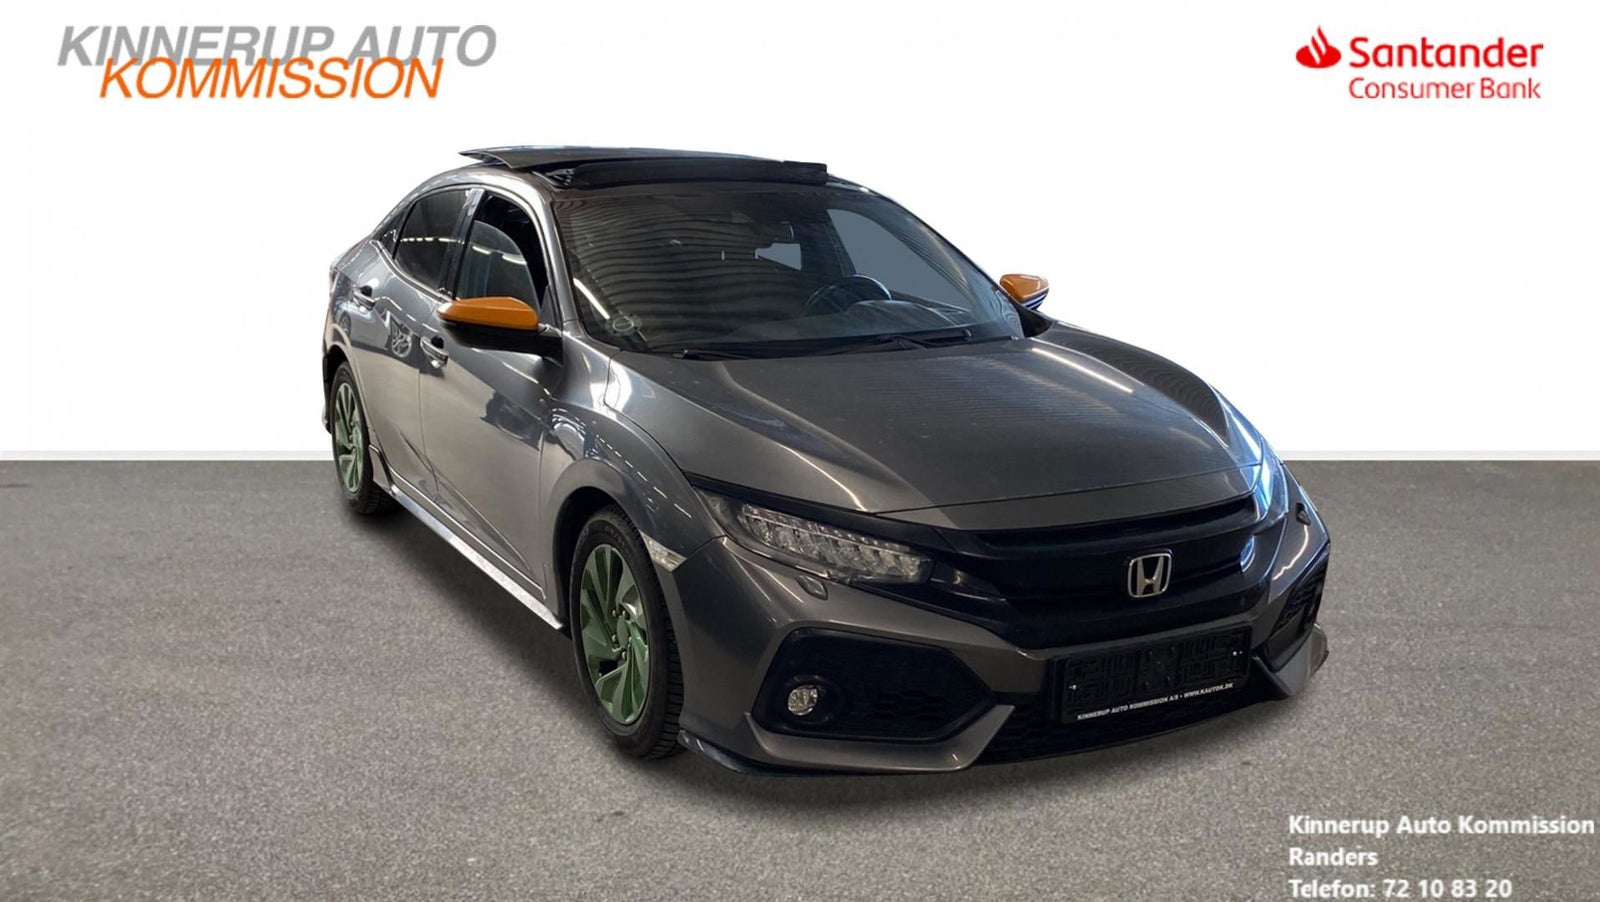 Honda Civic 1,5 VTEC Turbo Sport+ Benzin modelår 2018 km